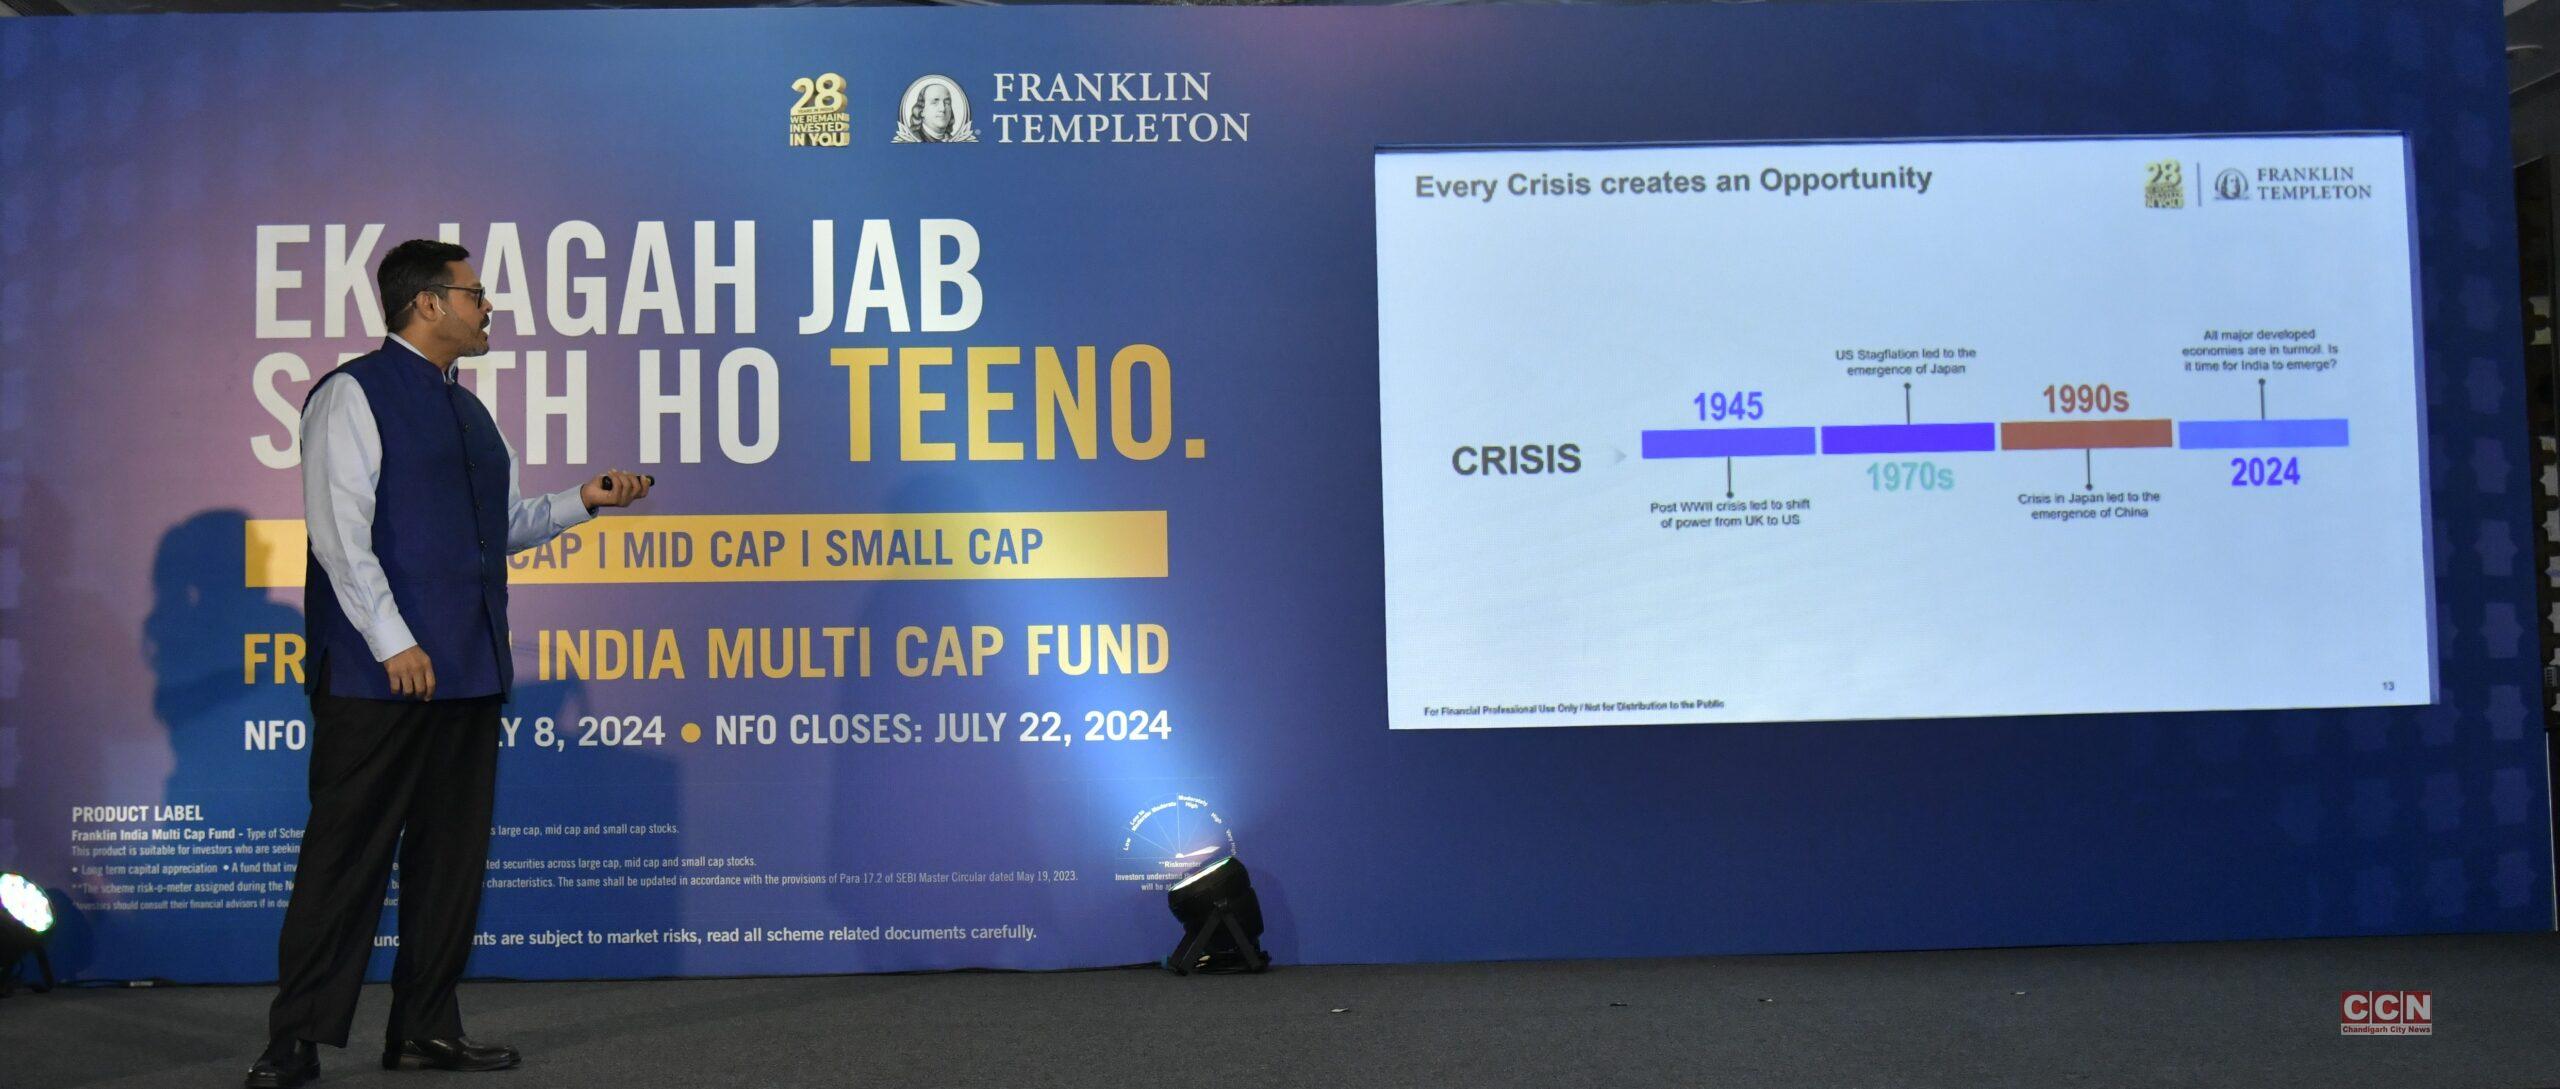 Franklin Templeton launches Franklin India Multi Cap Fund